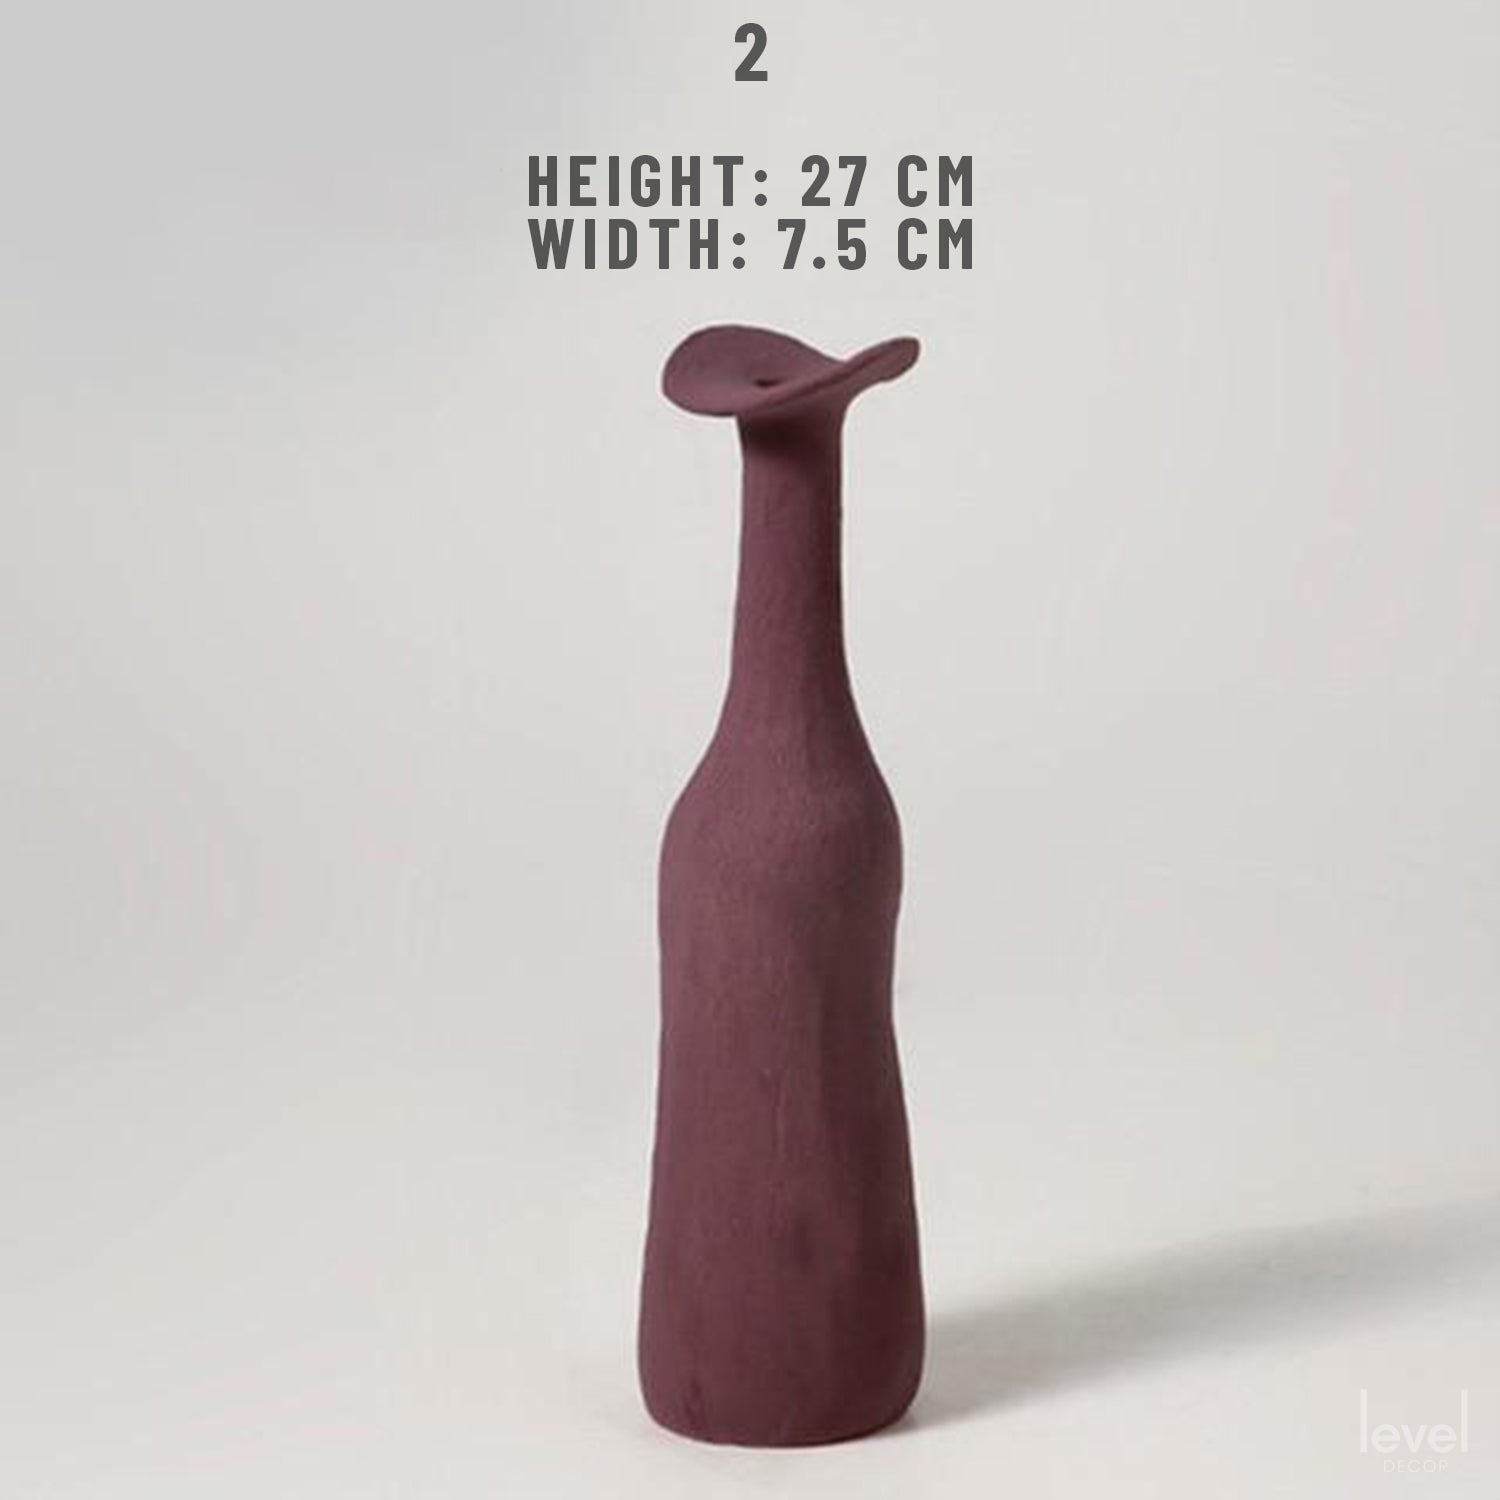 Minimalist Nordic Ceramic Morandi Colored Vases - 2 - Level Decor